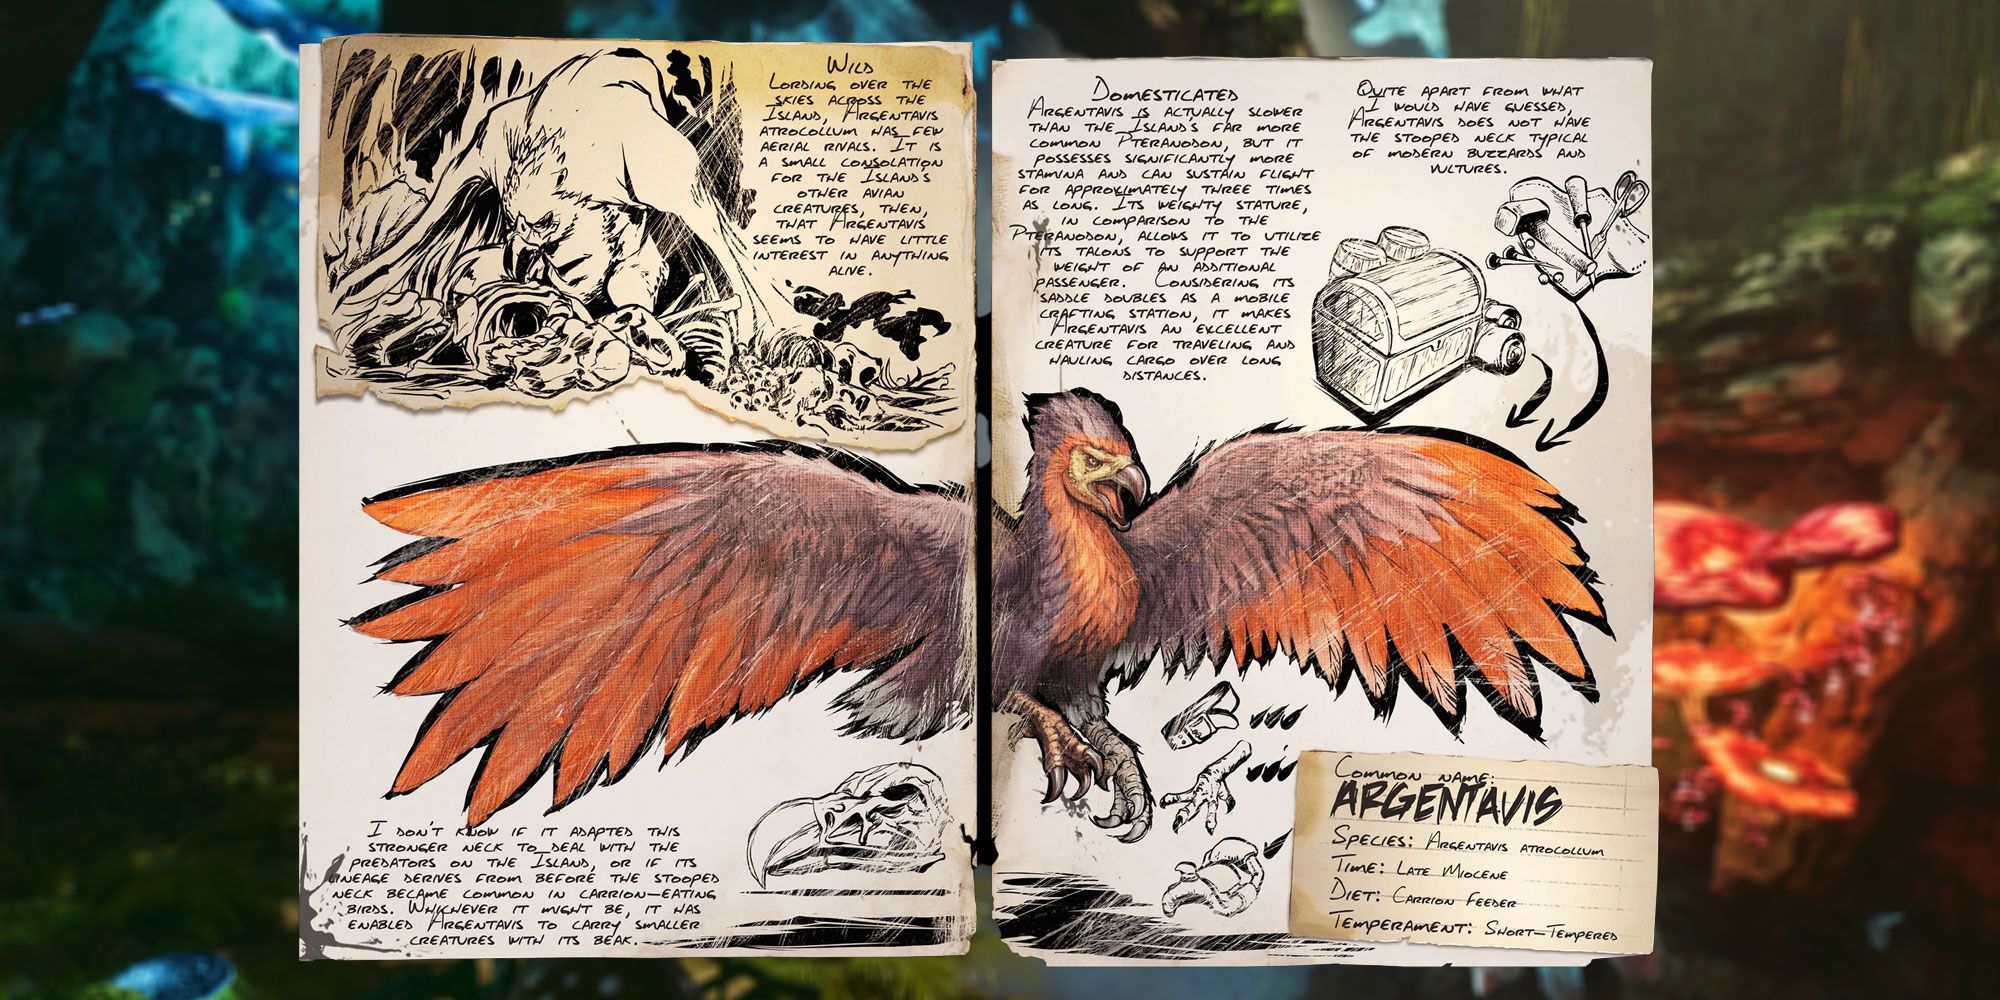 Argentavis bird detailed in an encyclopedia entry. 